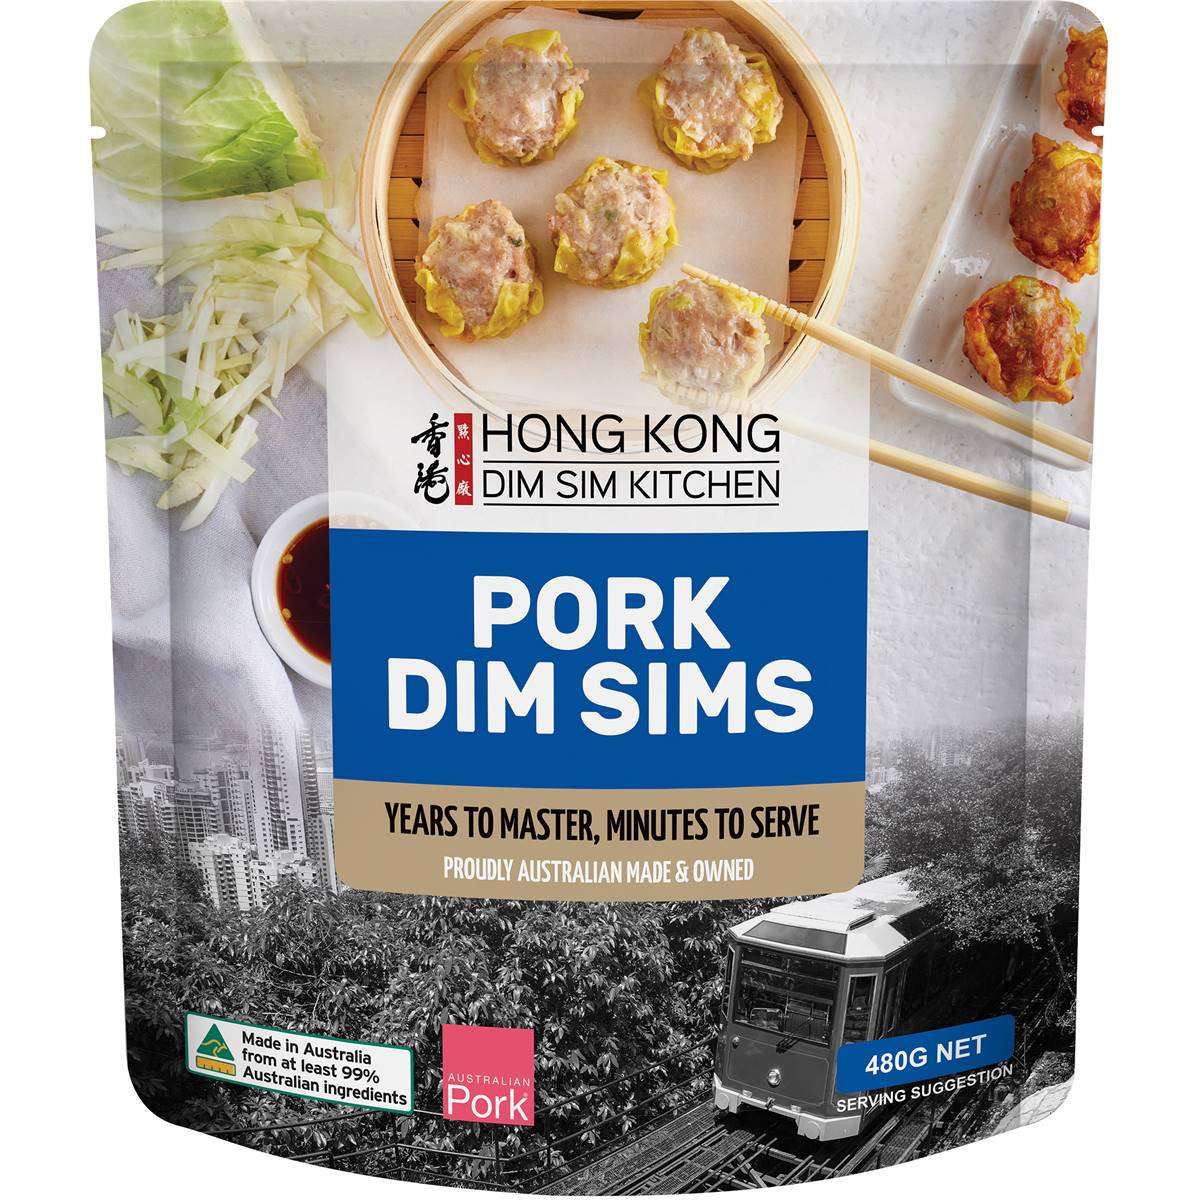 Calories in Hong Kong Dim Sim Kitchen Pork Dim Sims